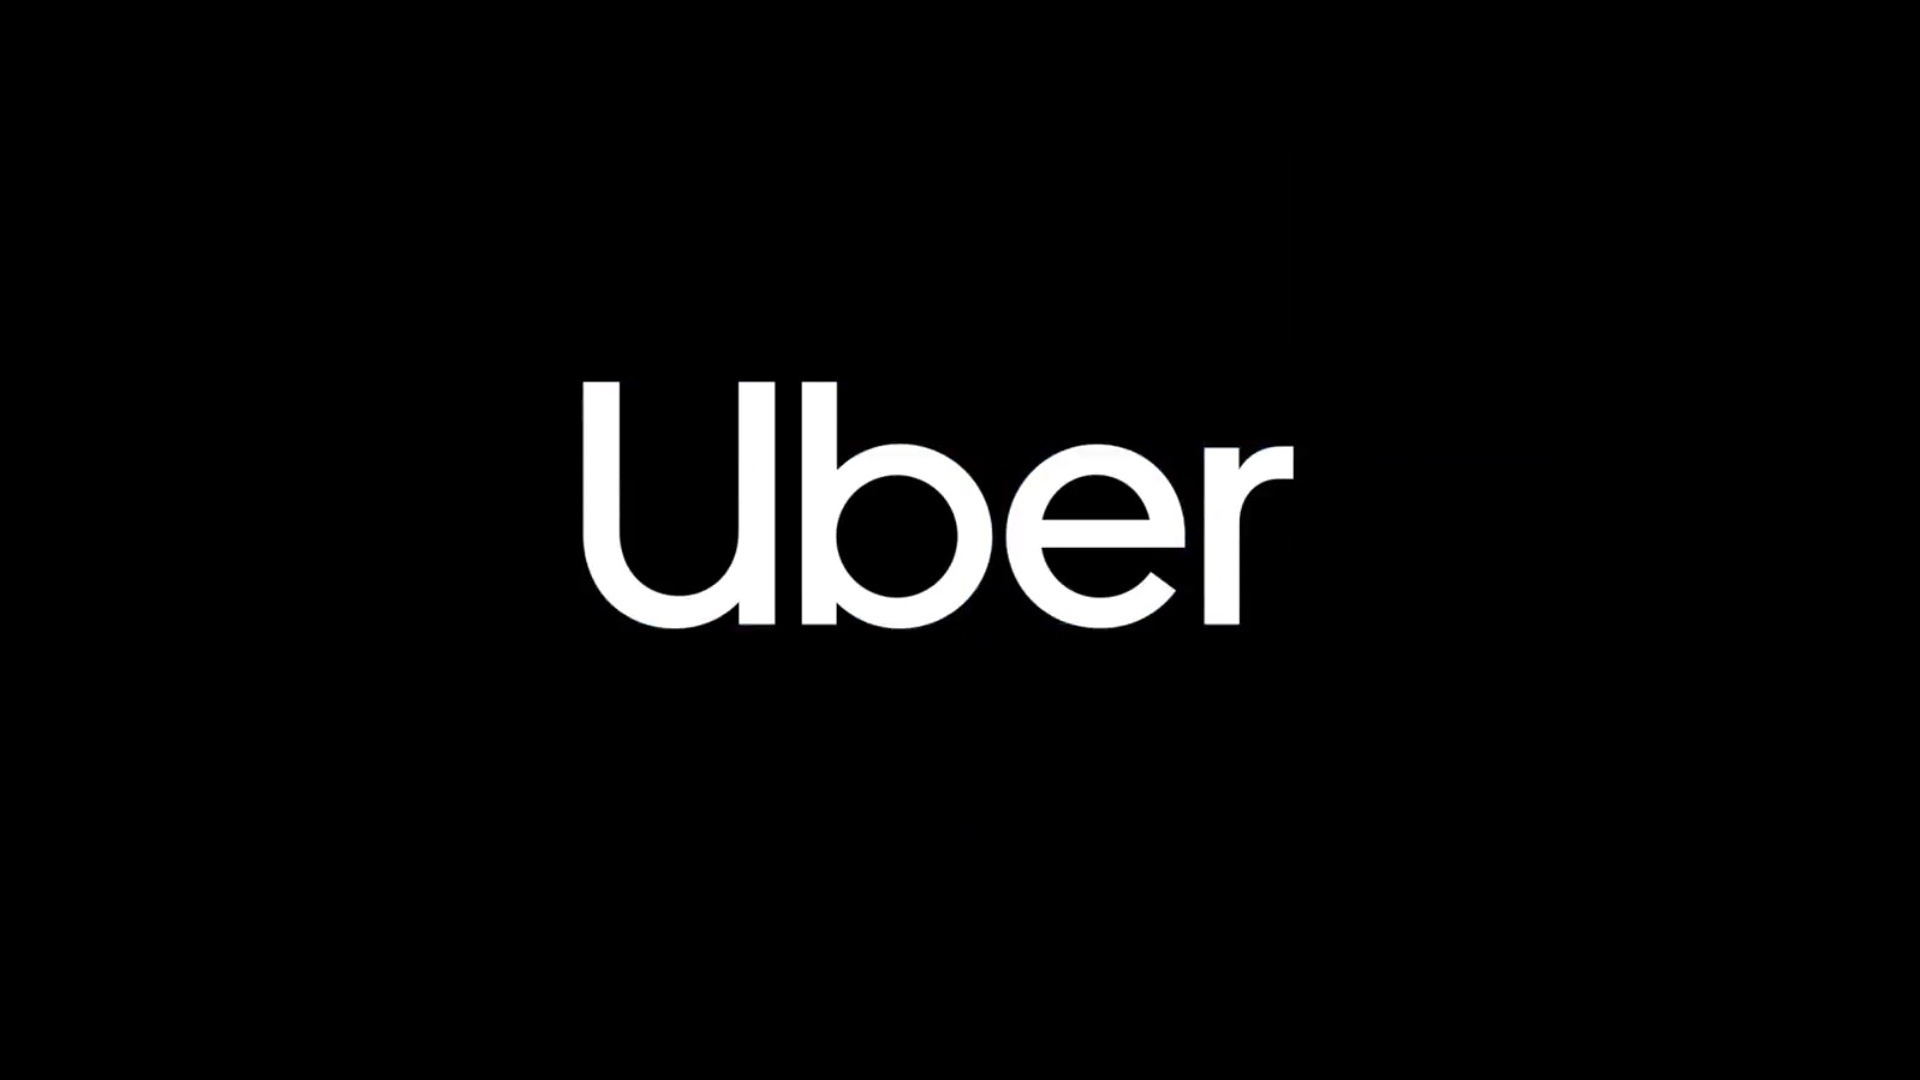 Uber: Peer-to-peer ridesharing, Food delivery, Bicycle-sharing, Ride-hailing, Logo. 1920x1080 Full HD Wallpaper.